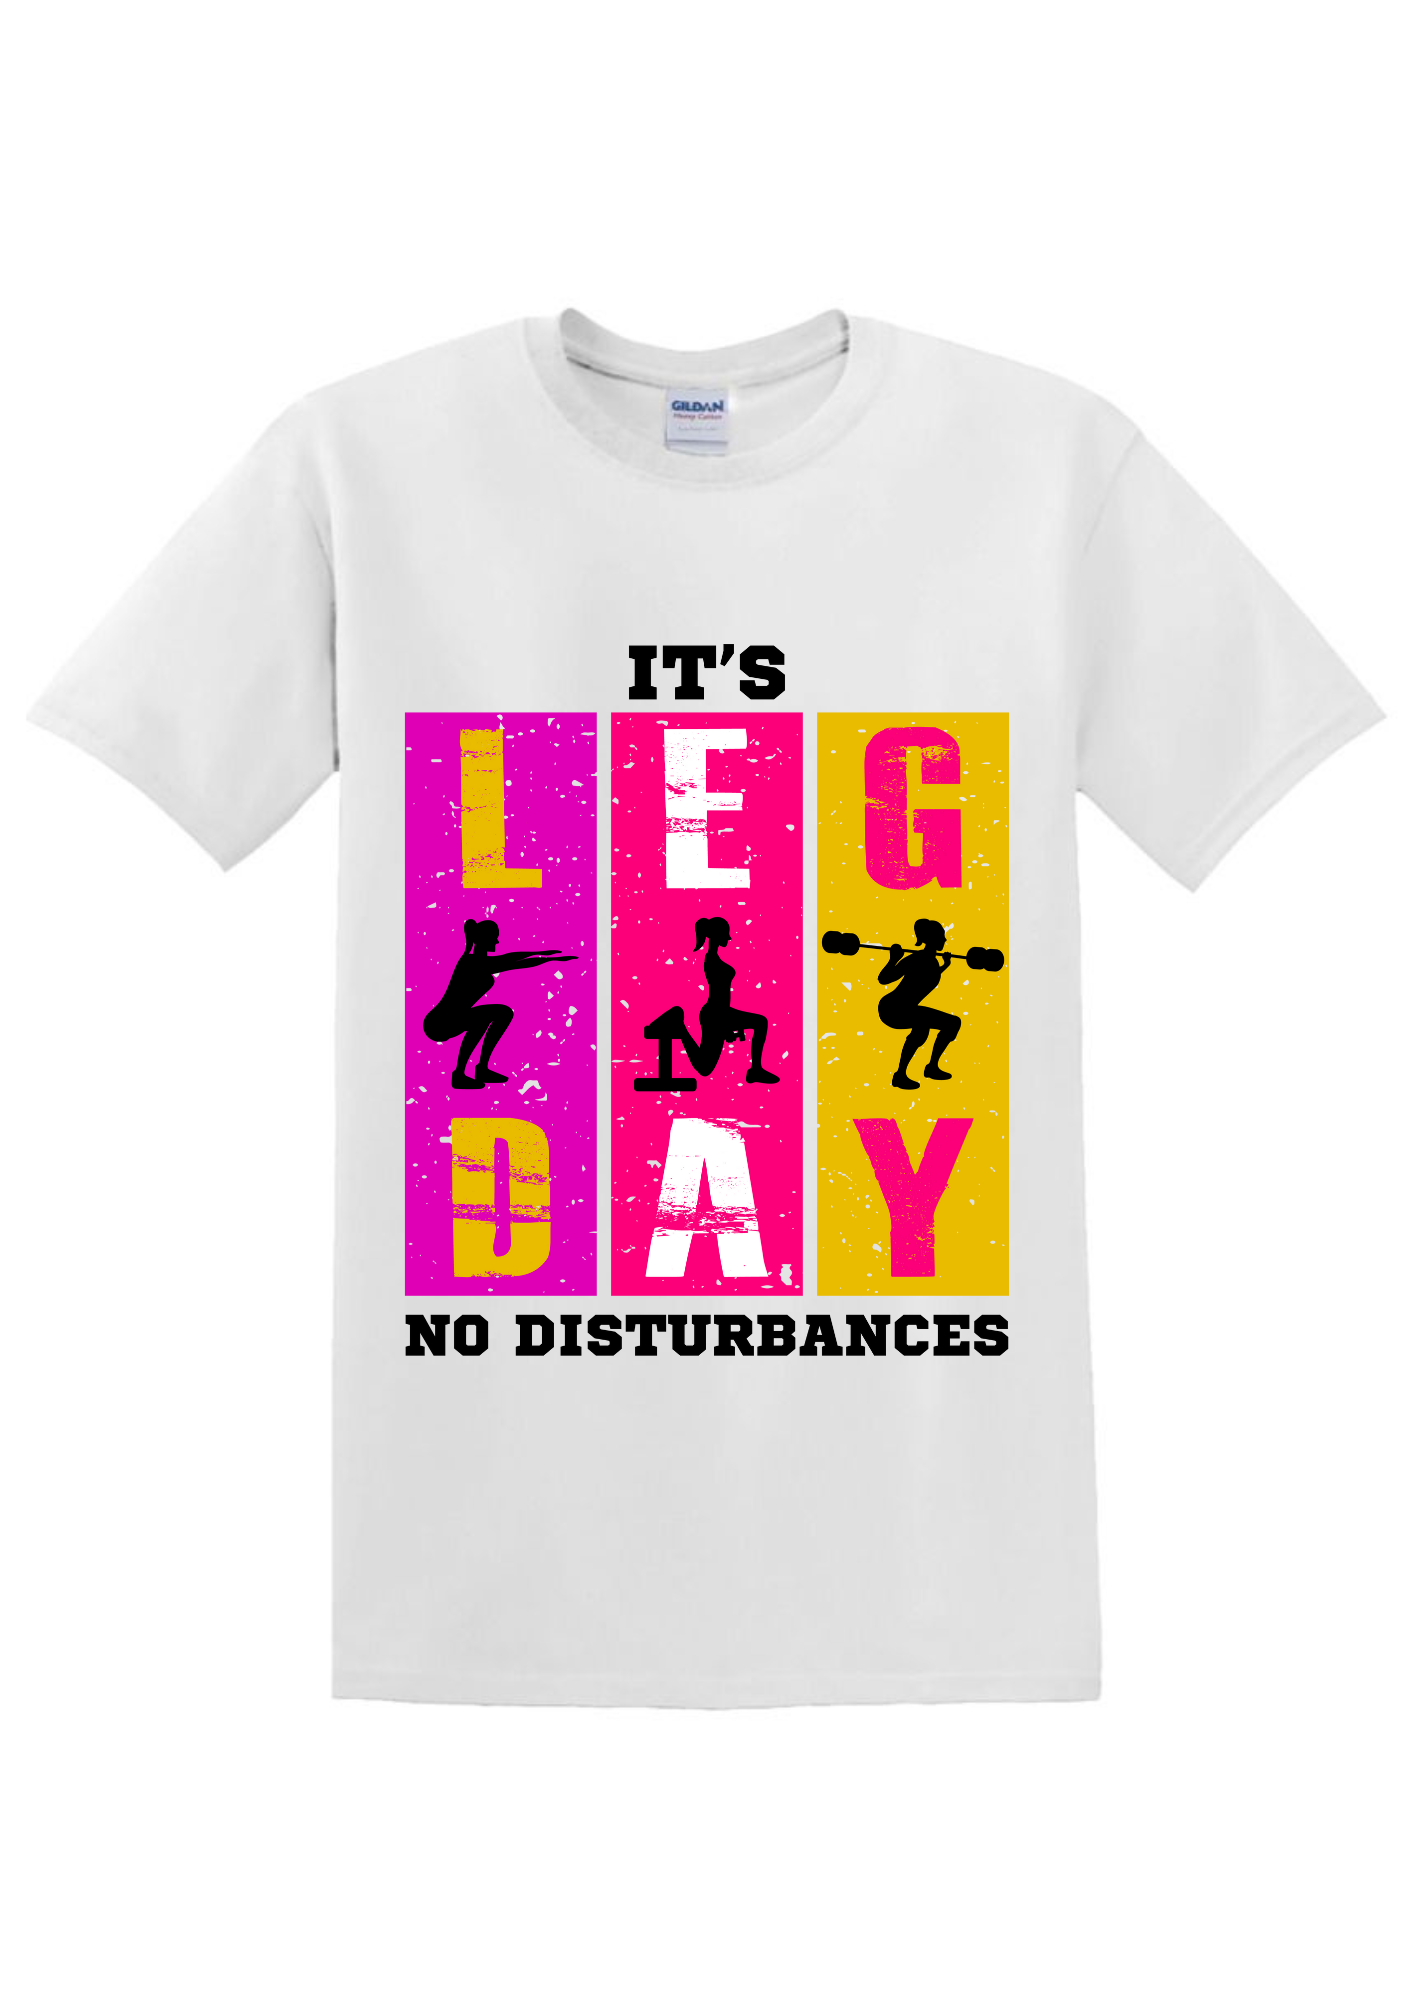 It's Leg Day T-Shirt for women